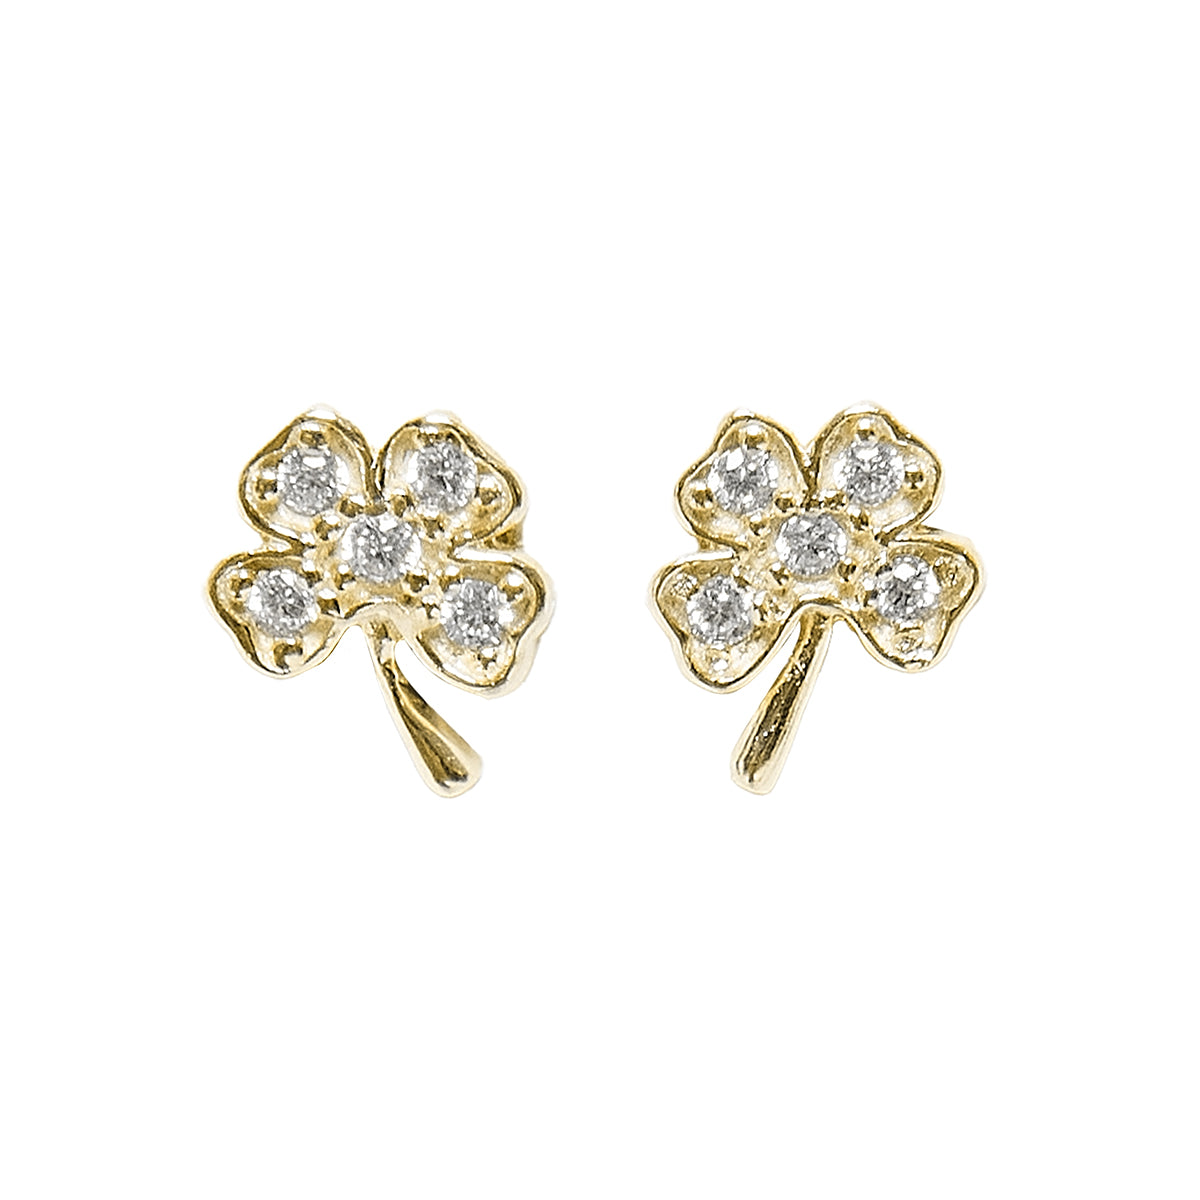 Trebol 18k sterling gold and diamond earrings